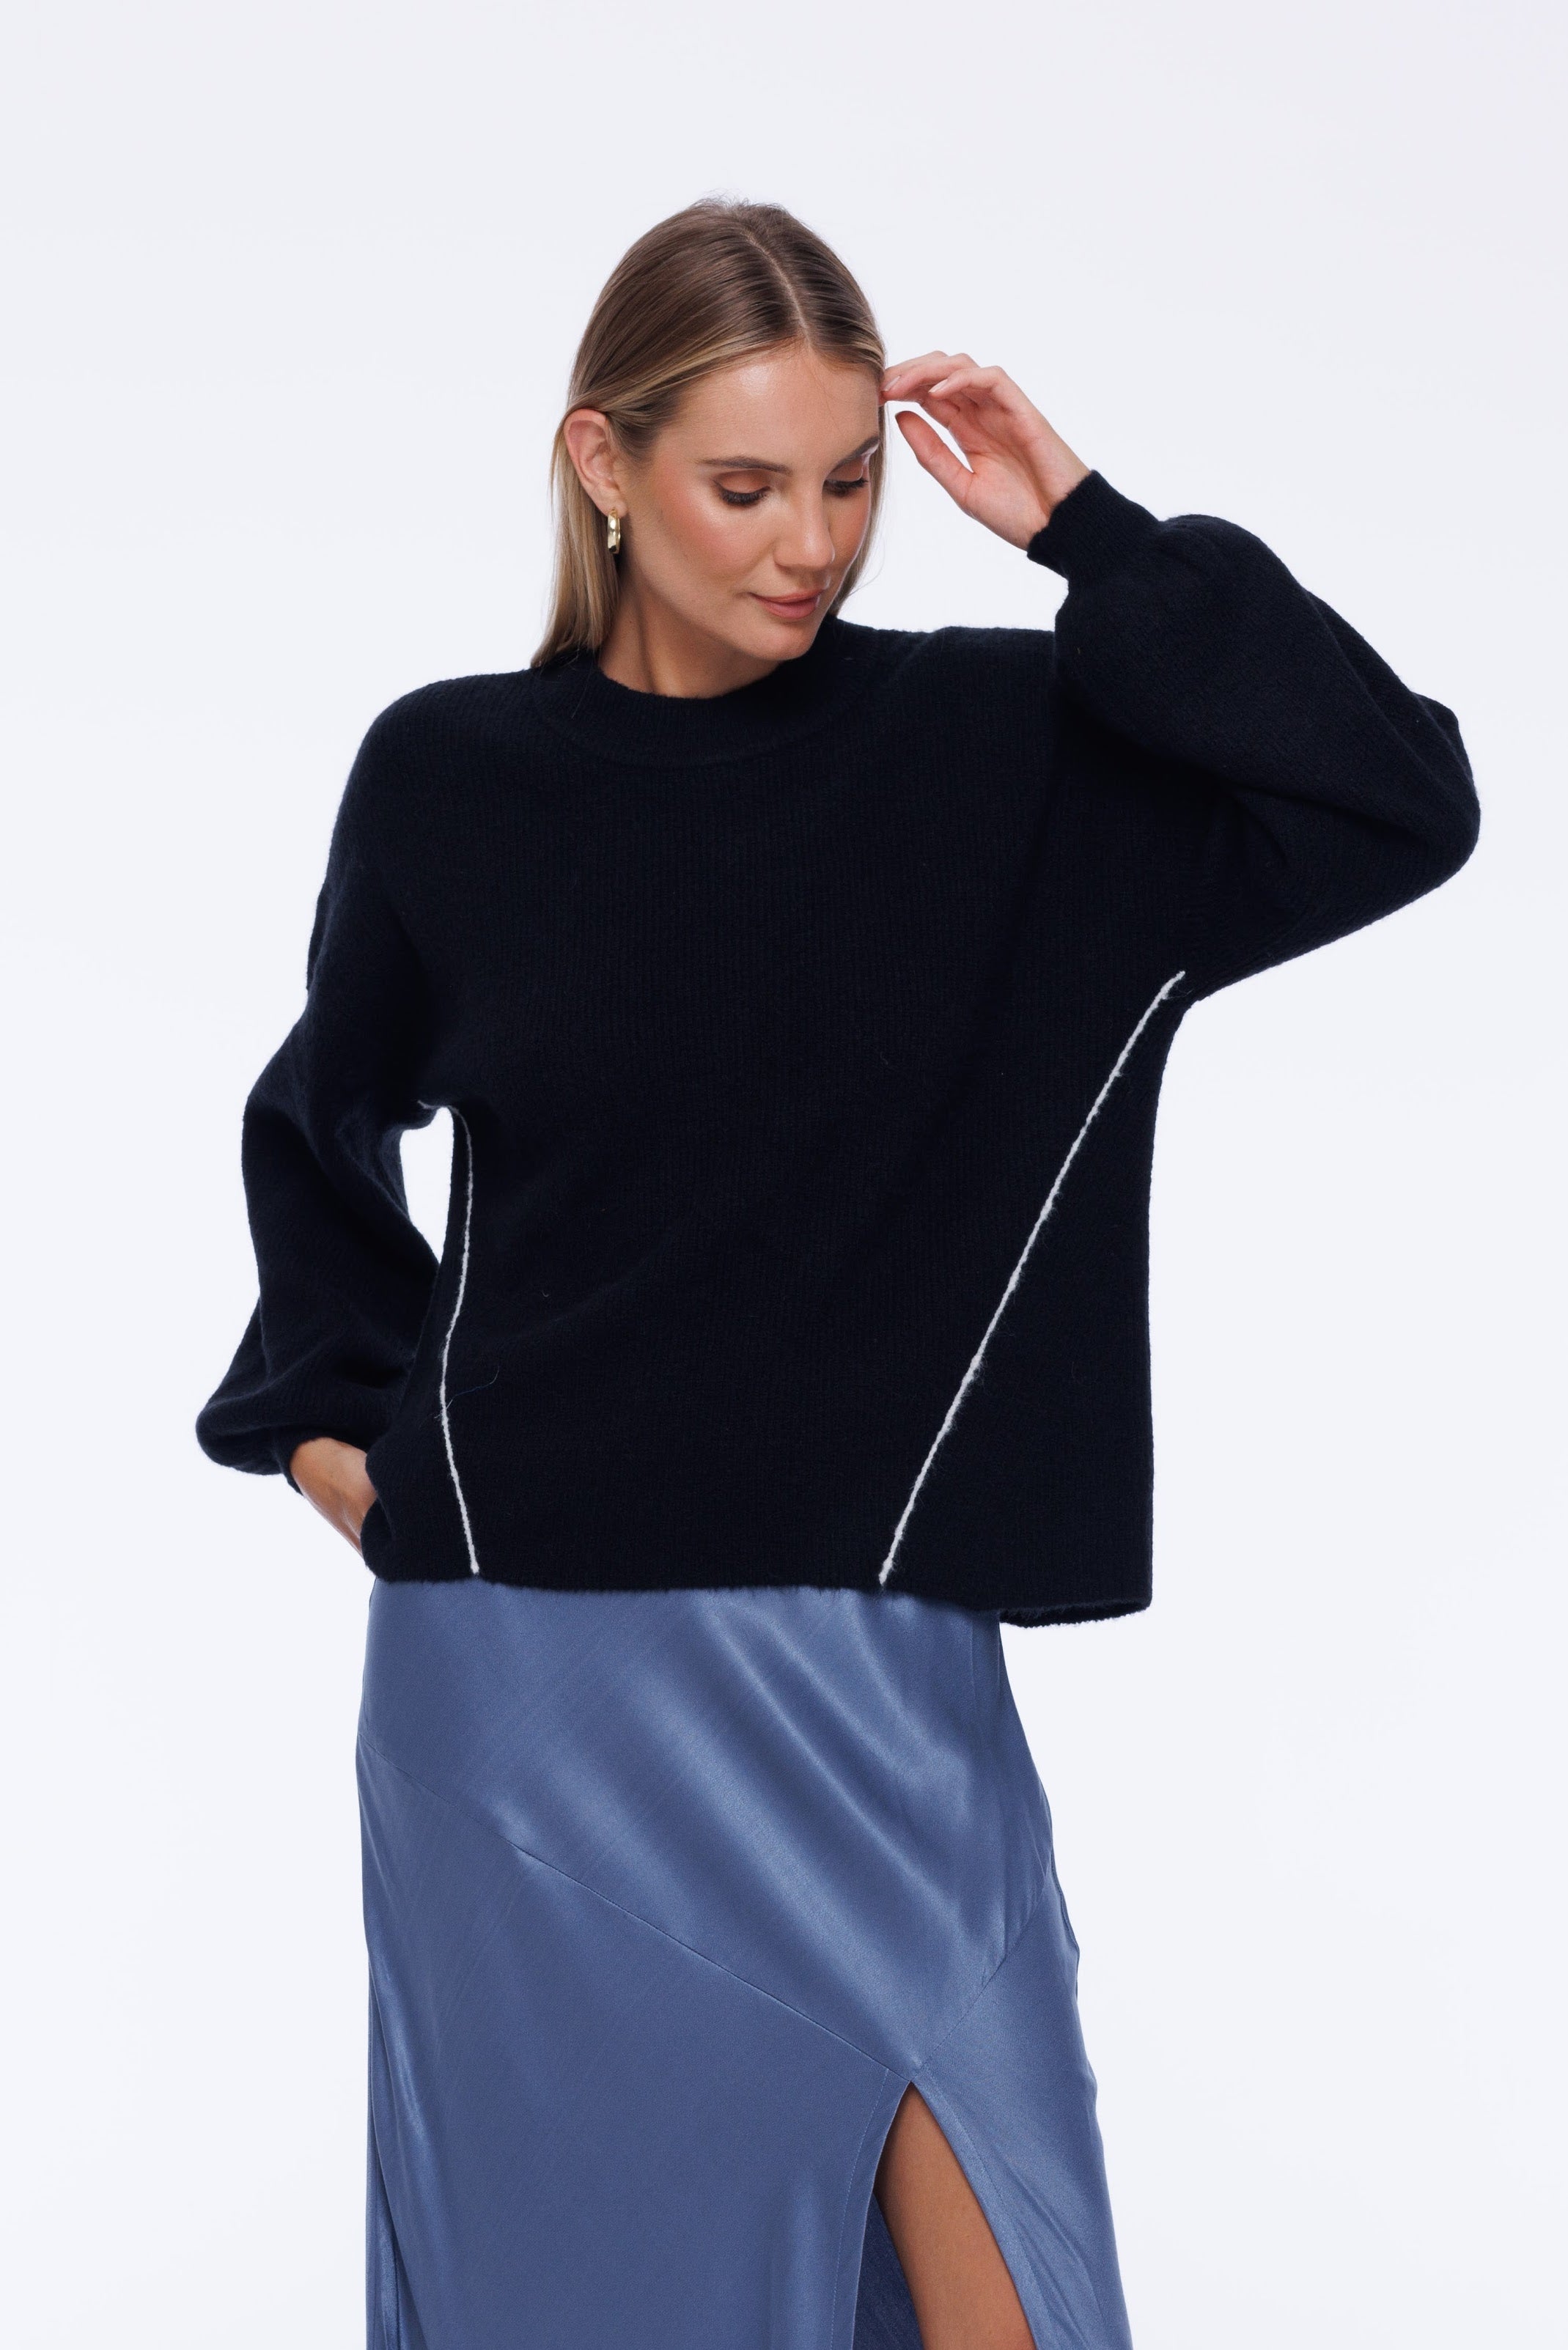 Viola Sweater - Black with White Stitching